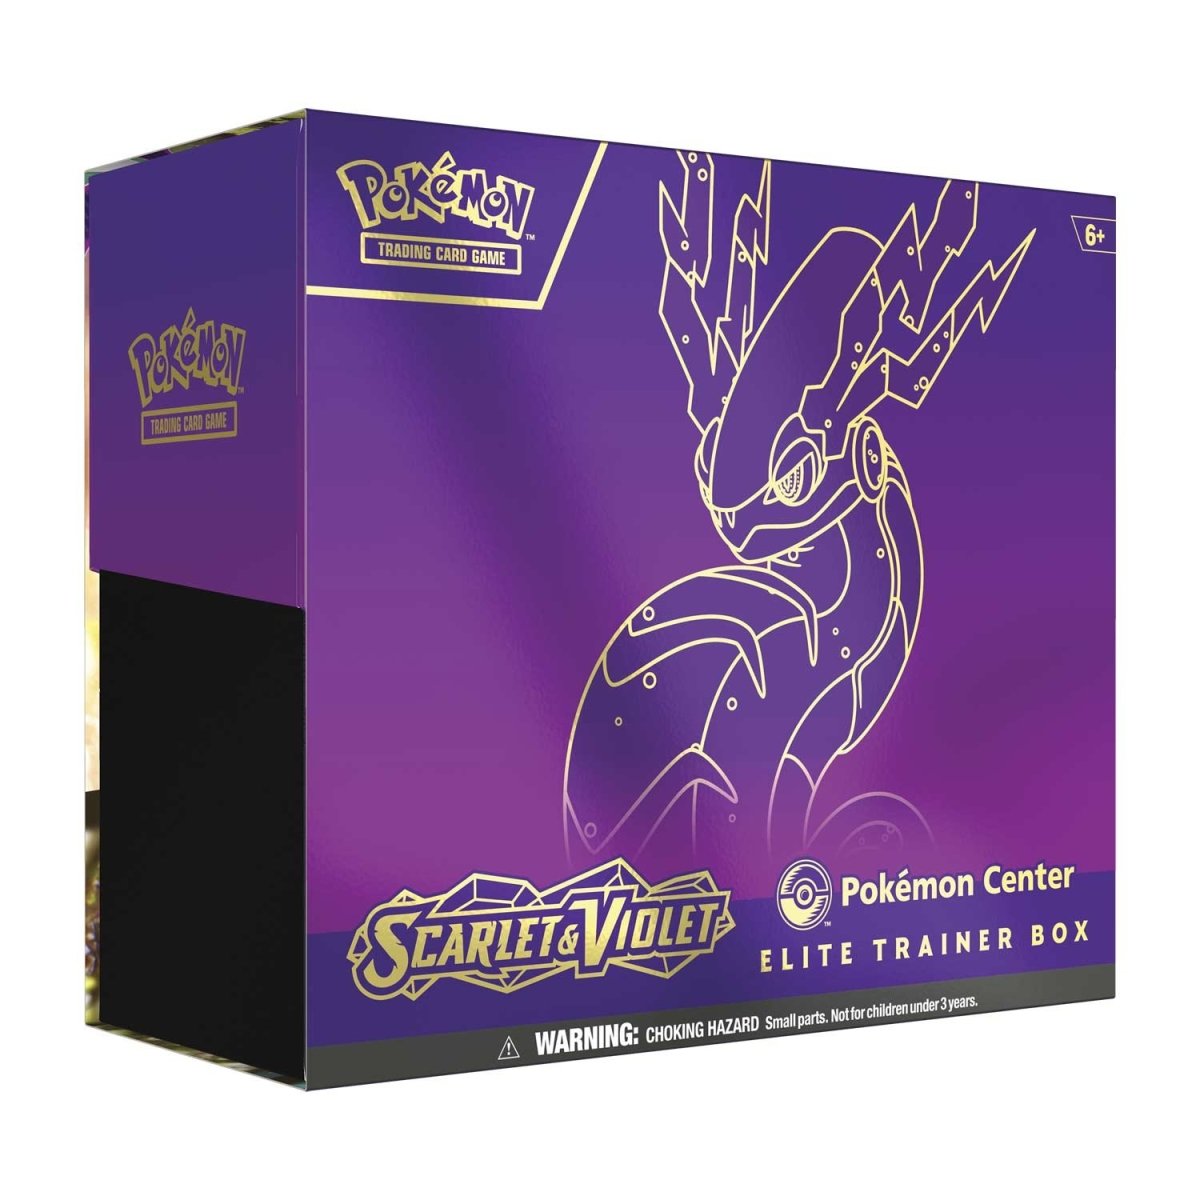 Pokémon: Scarlet & Violet Elite Trainer Box